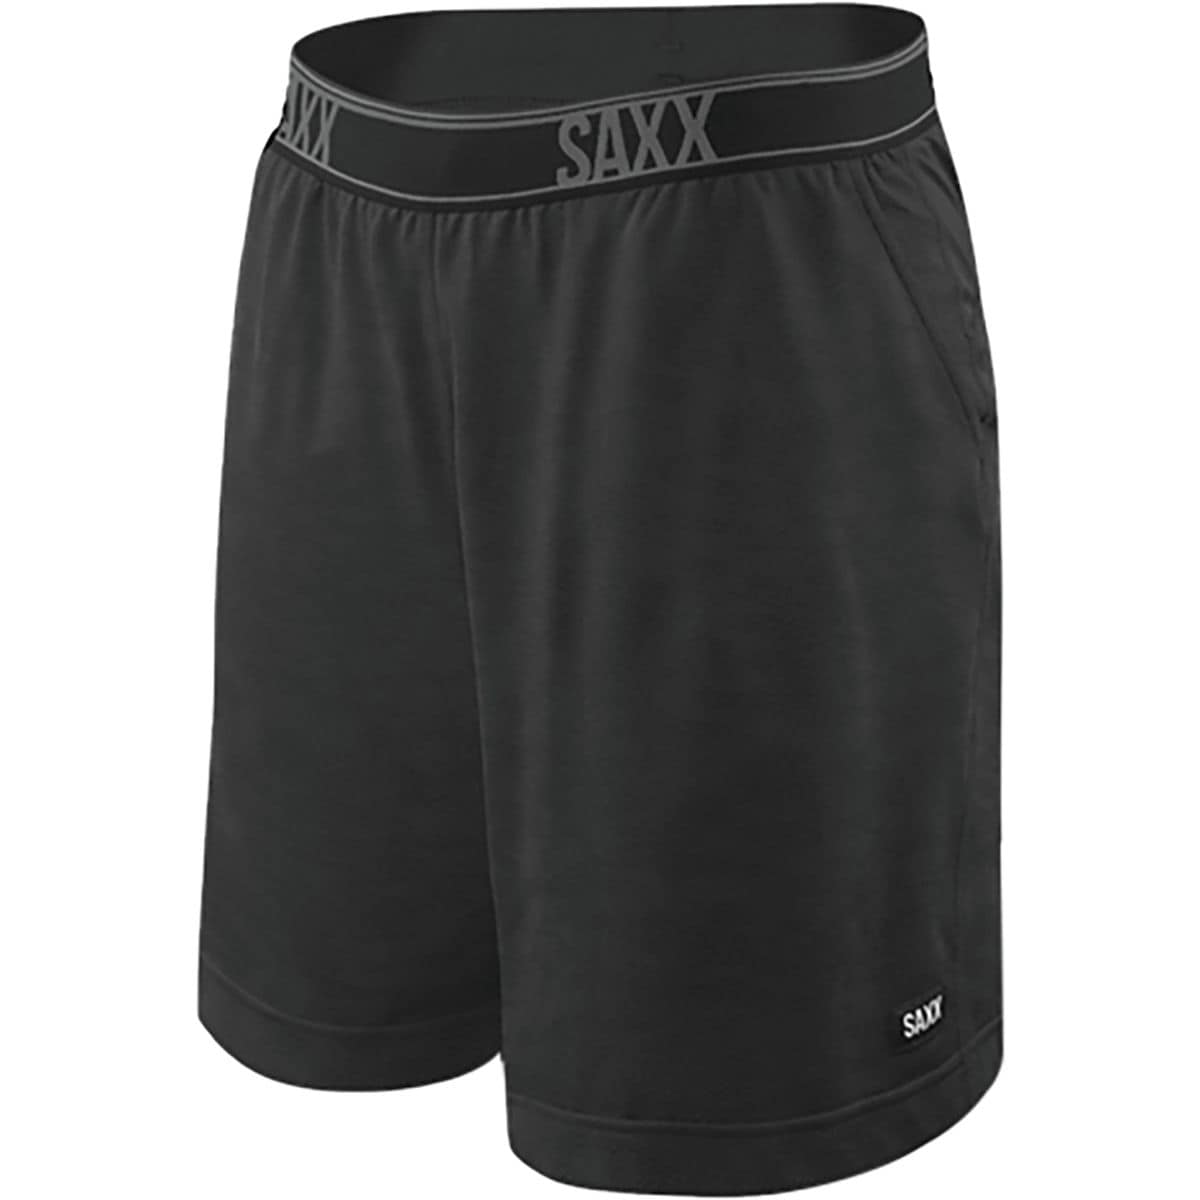 SAXX Legend 2N1 Short - Men's - Clothing